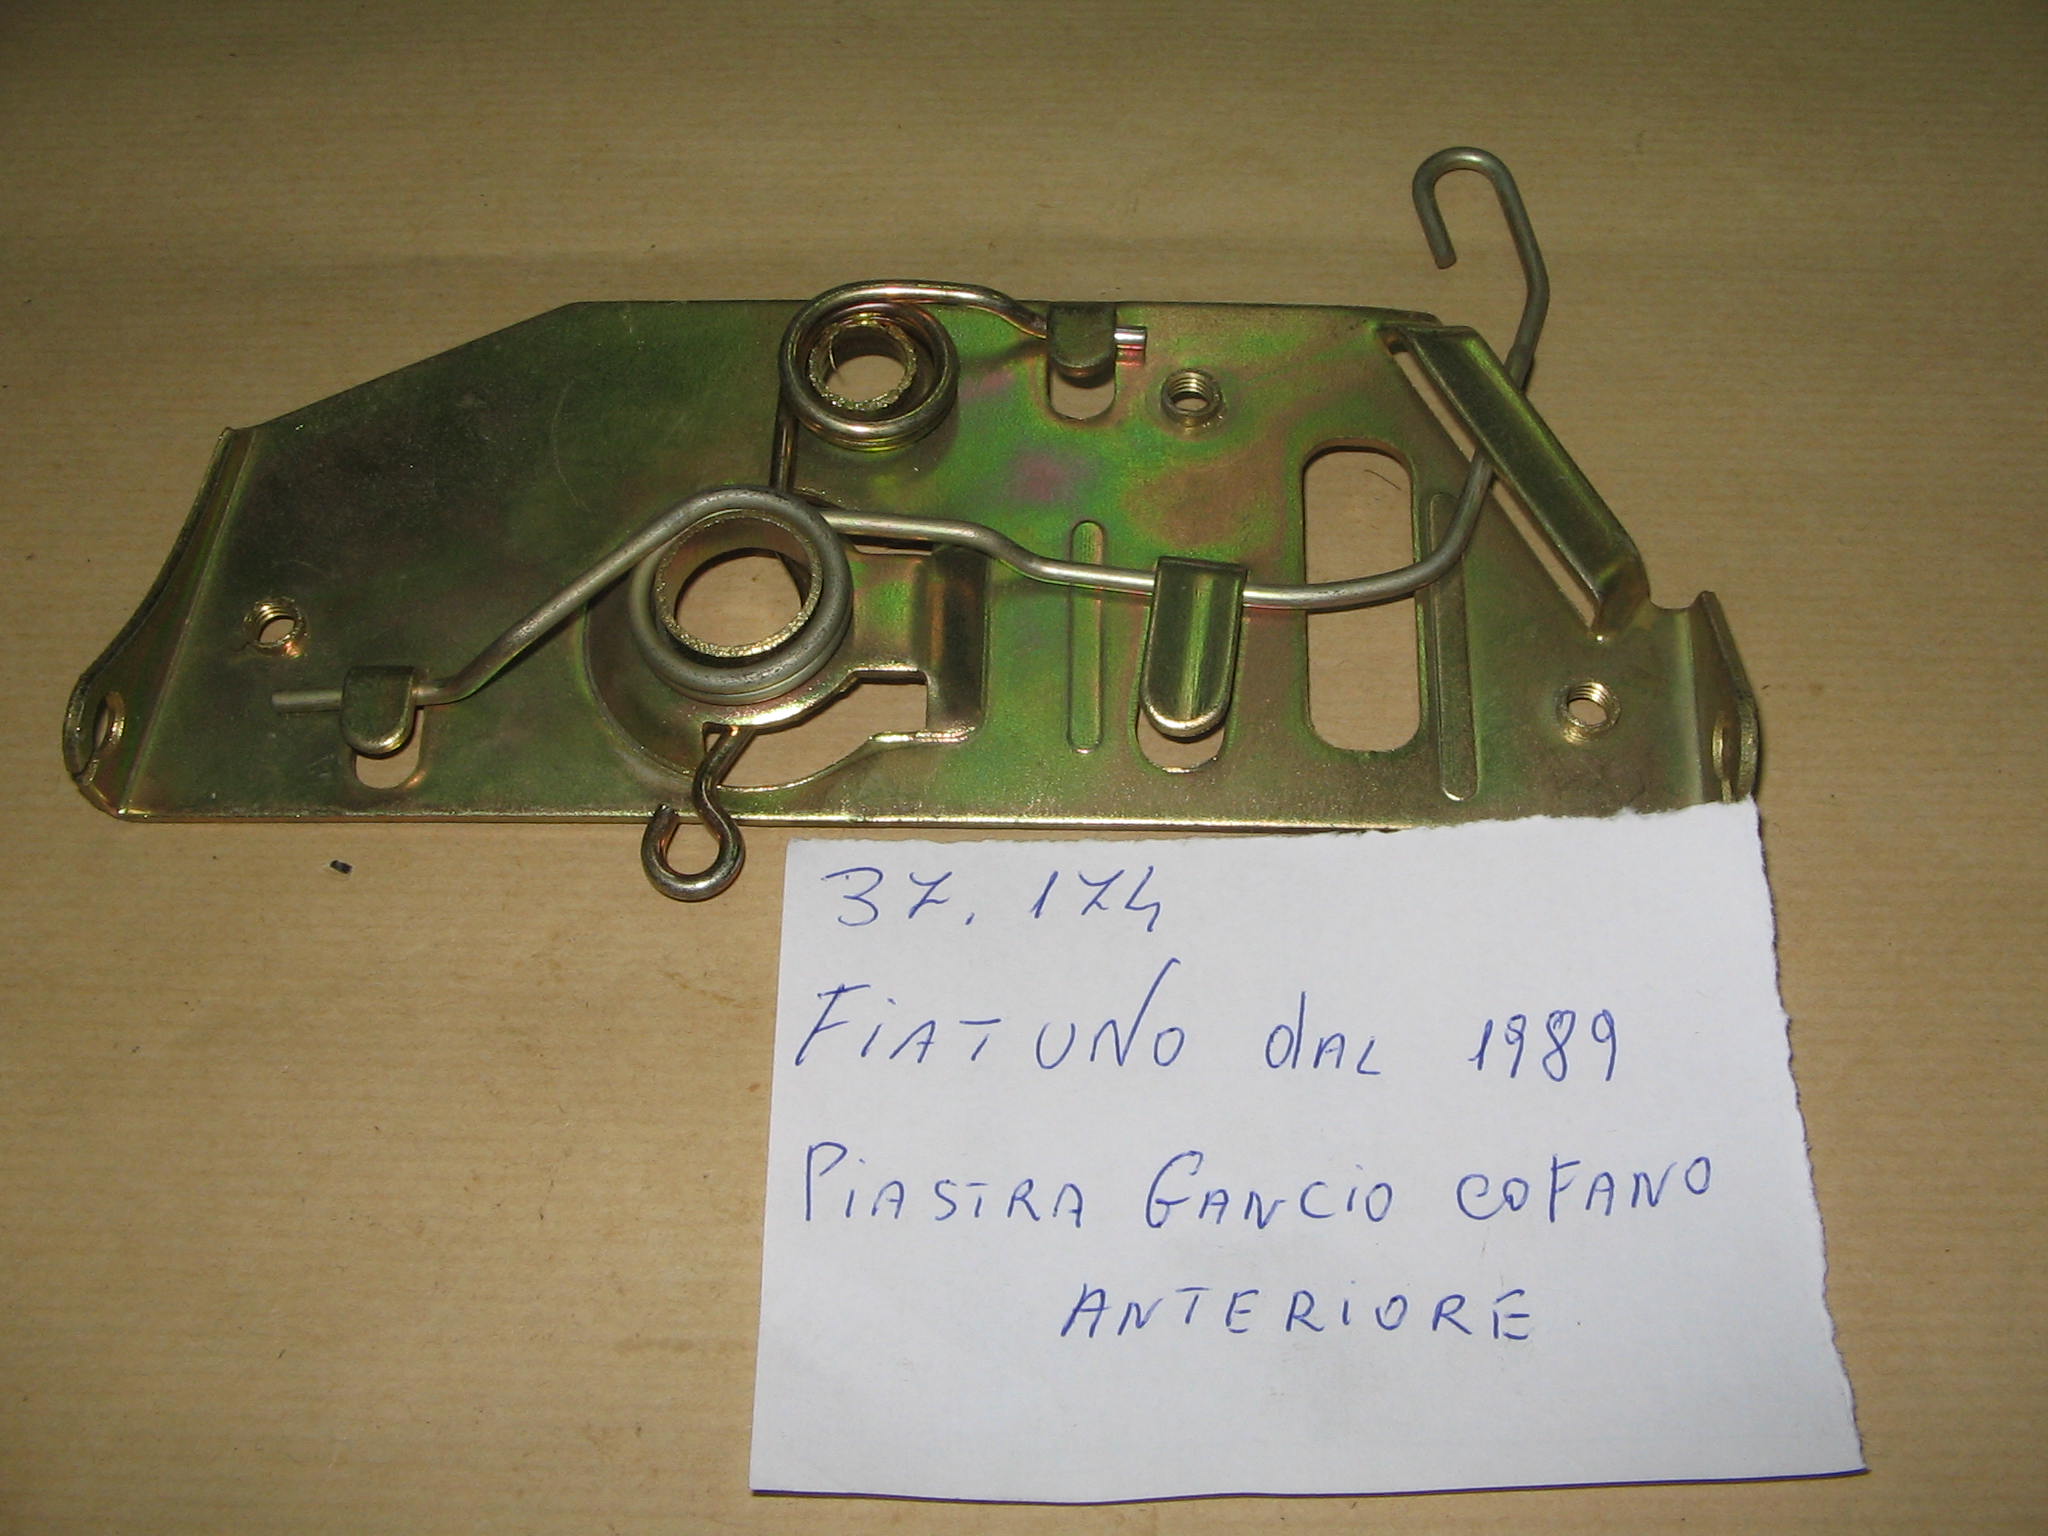 FIAT UNO DAL 1989 PIASTRA COFANO ANT.  N.20670